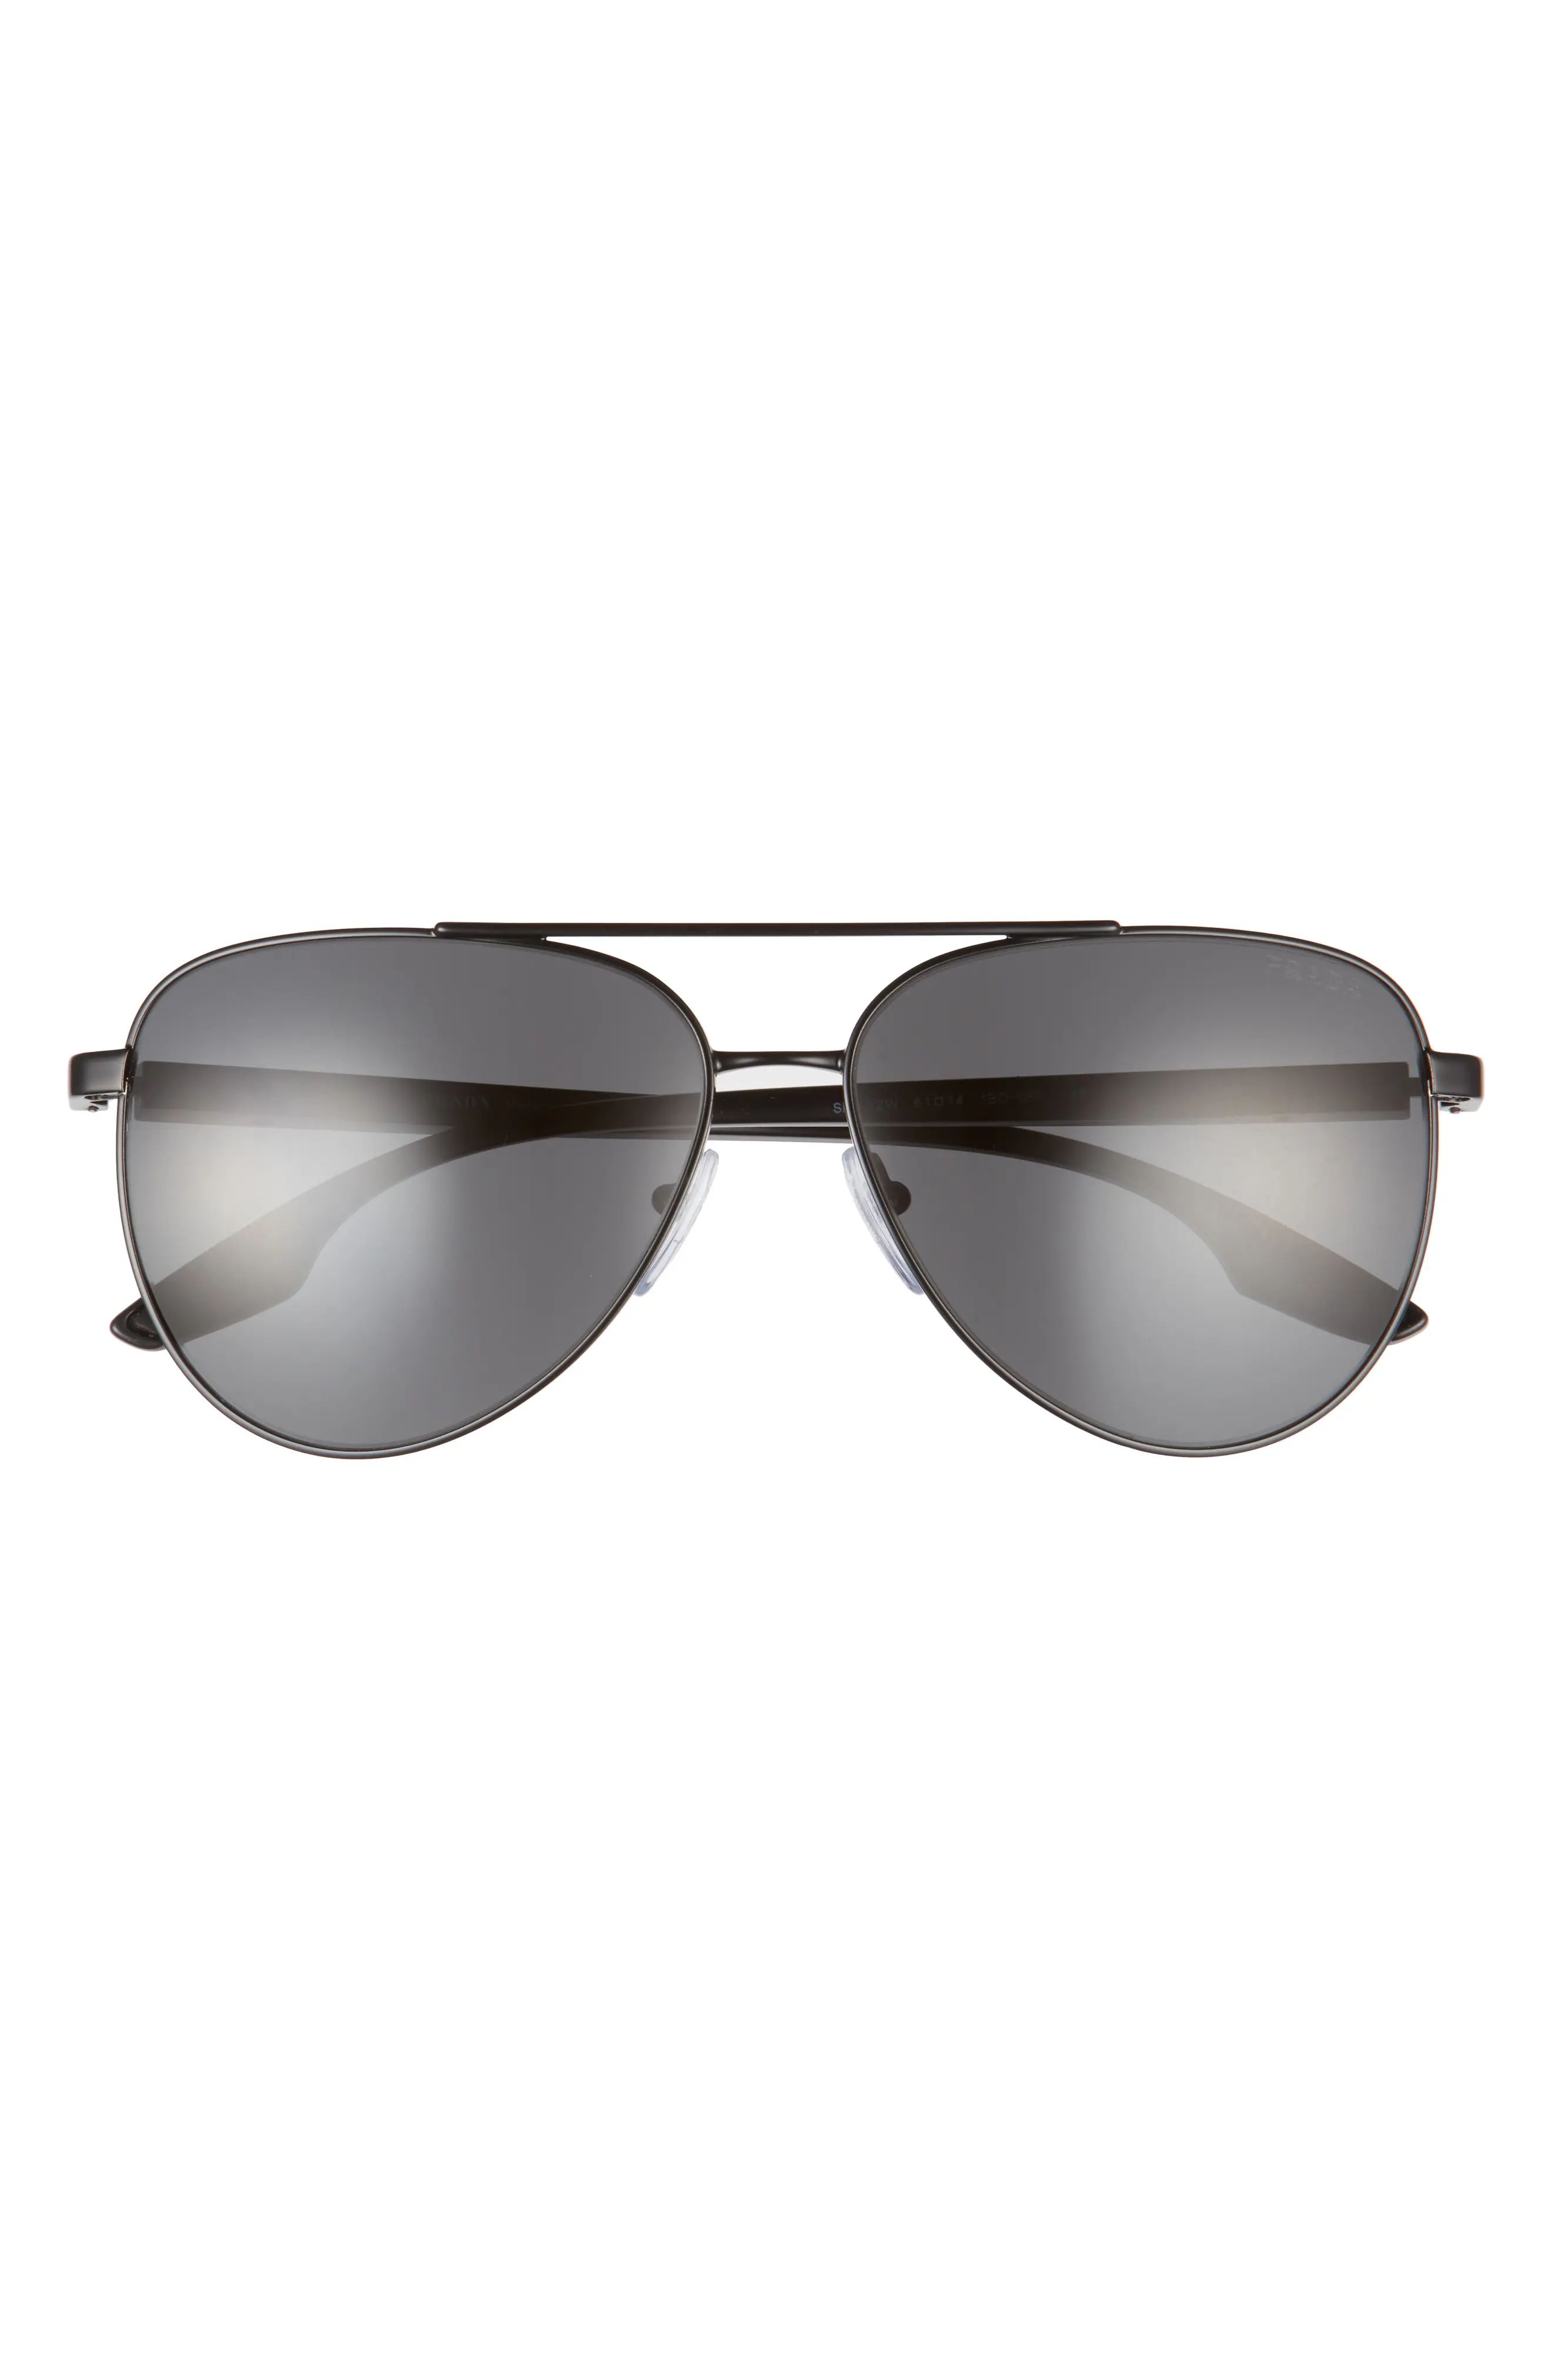 Prada Linea Rossa Prada 61mm Pilot Sunglasses in Matte Black/Dark Grey at Nordstrom | Nordstrom